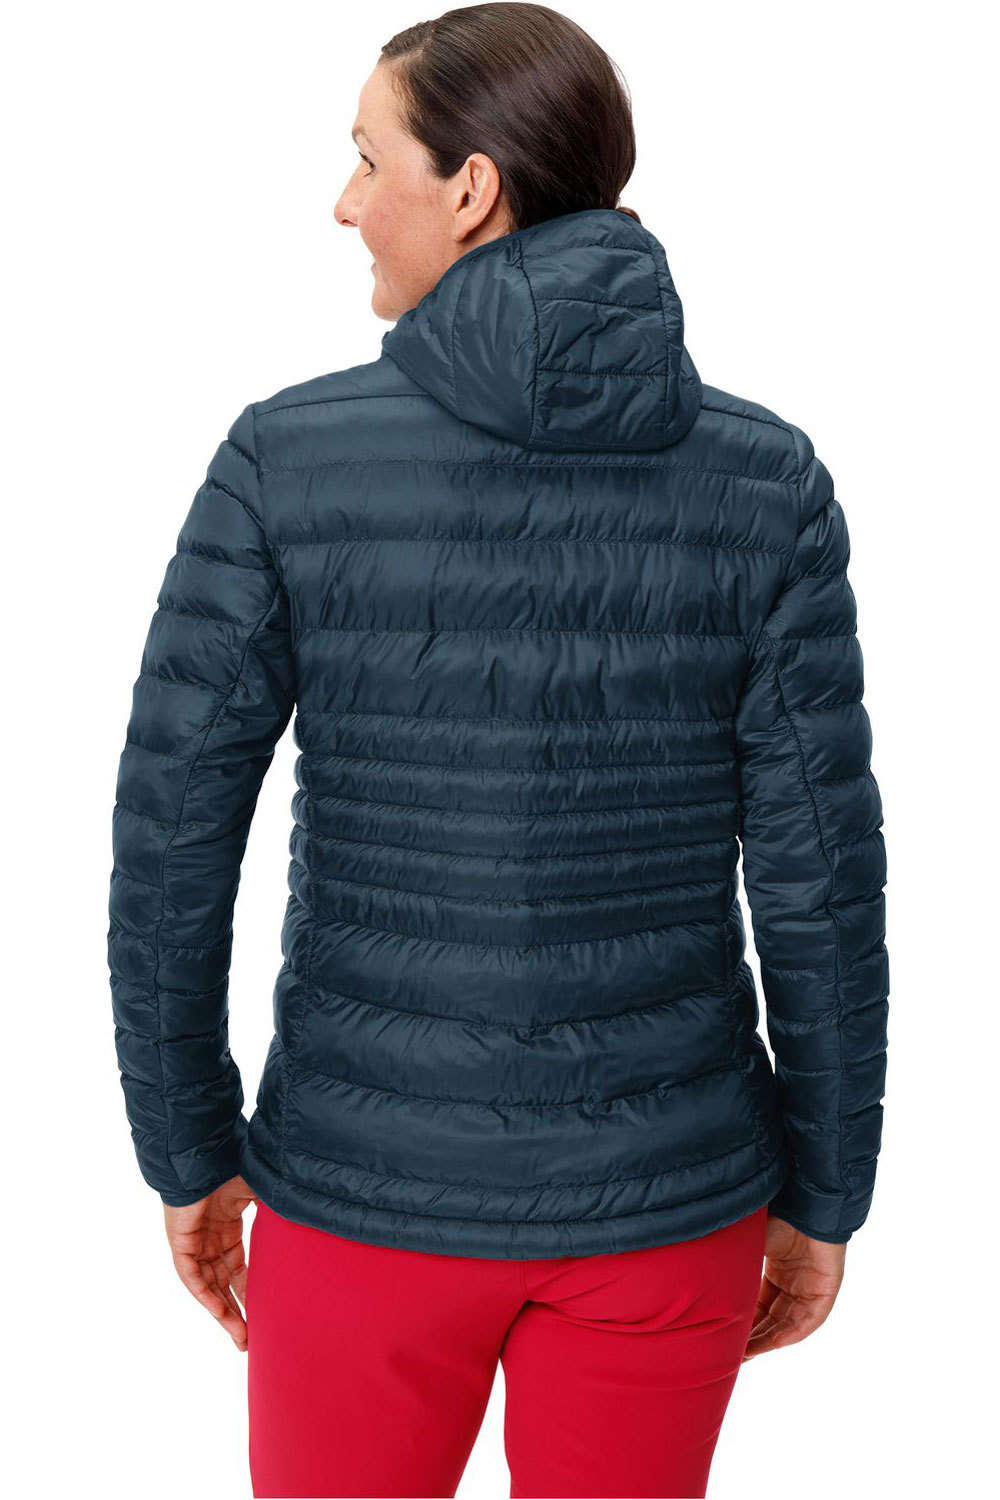 Vaude chaqueta outdoor mujer Womens Batura Hooded Insulation Jacket vista trasera